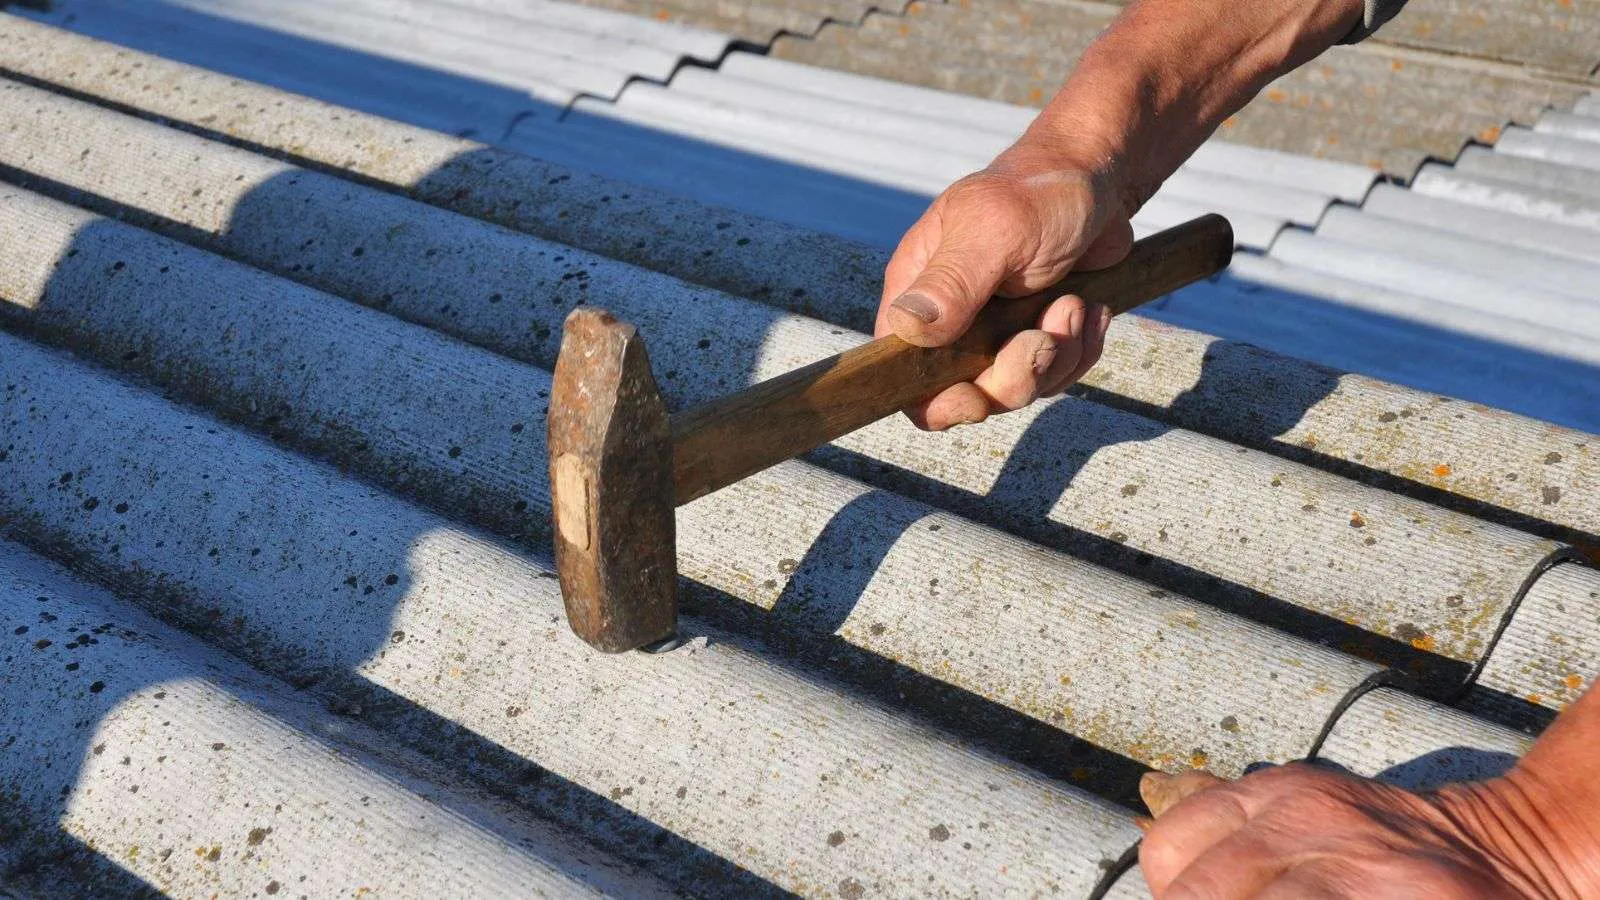 Nailing an aluminum roof - bighomeprojects.com